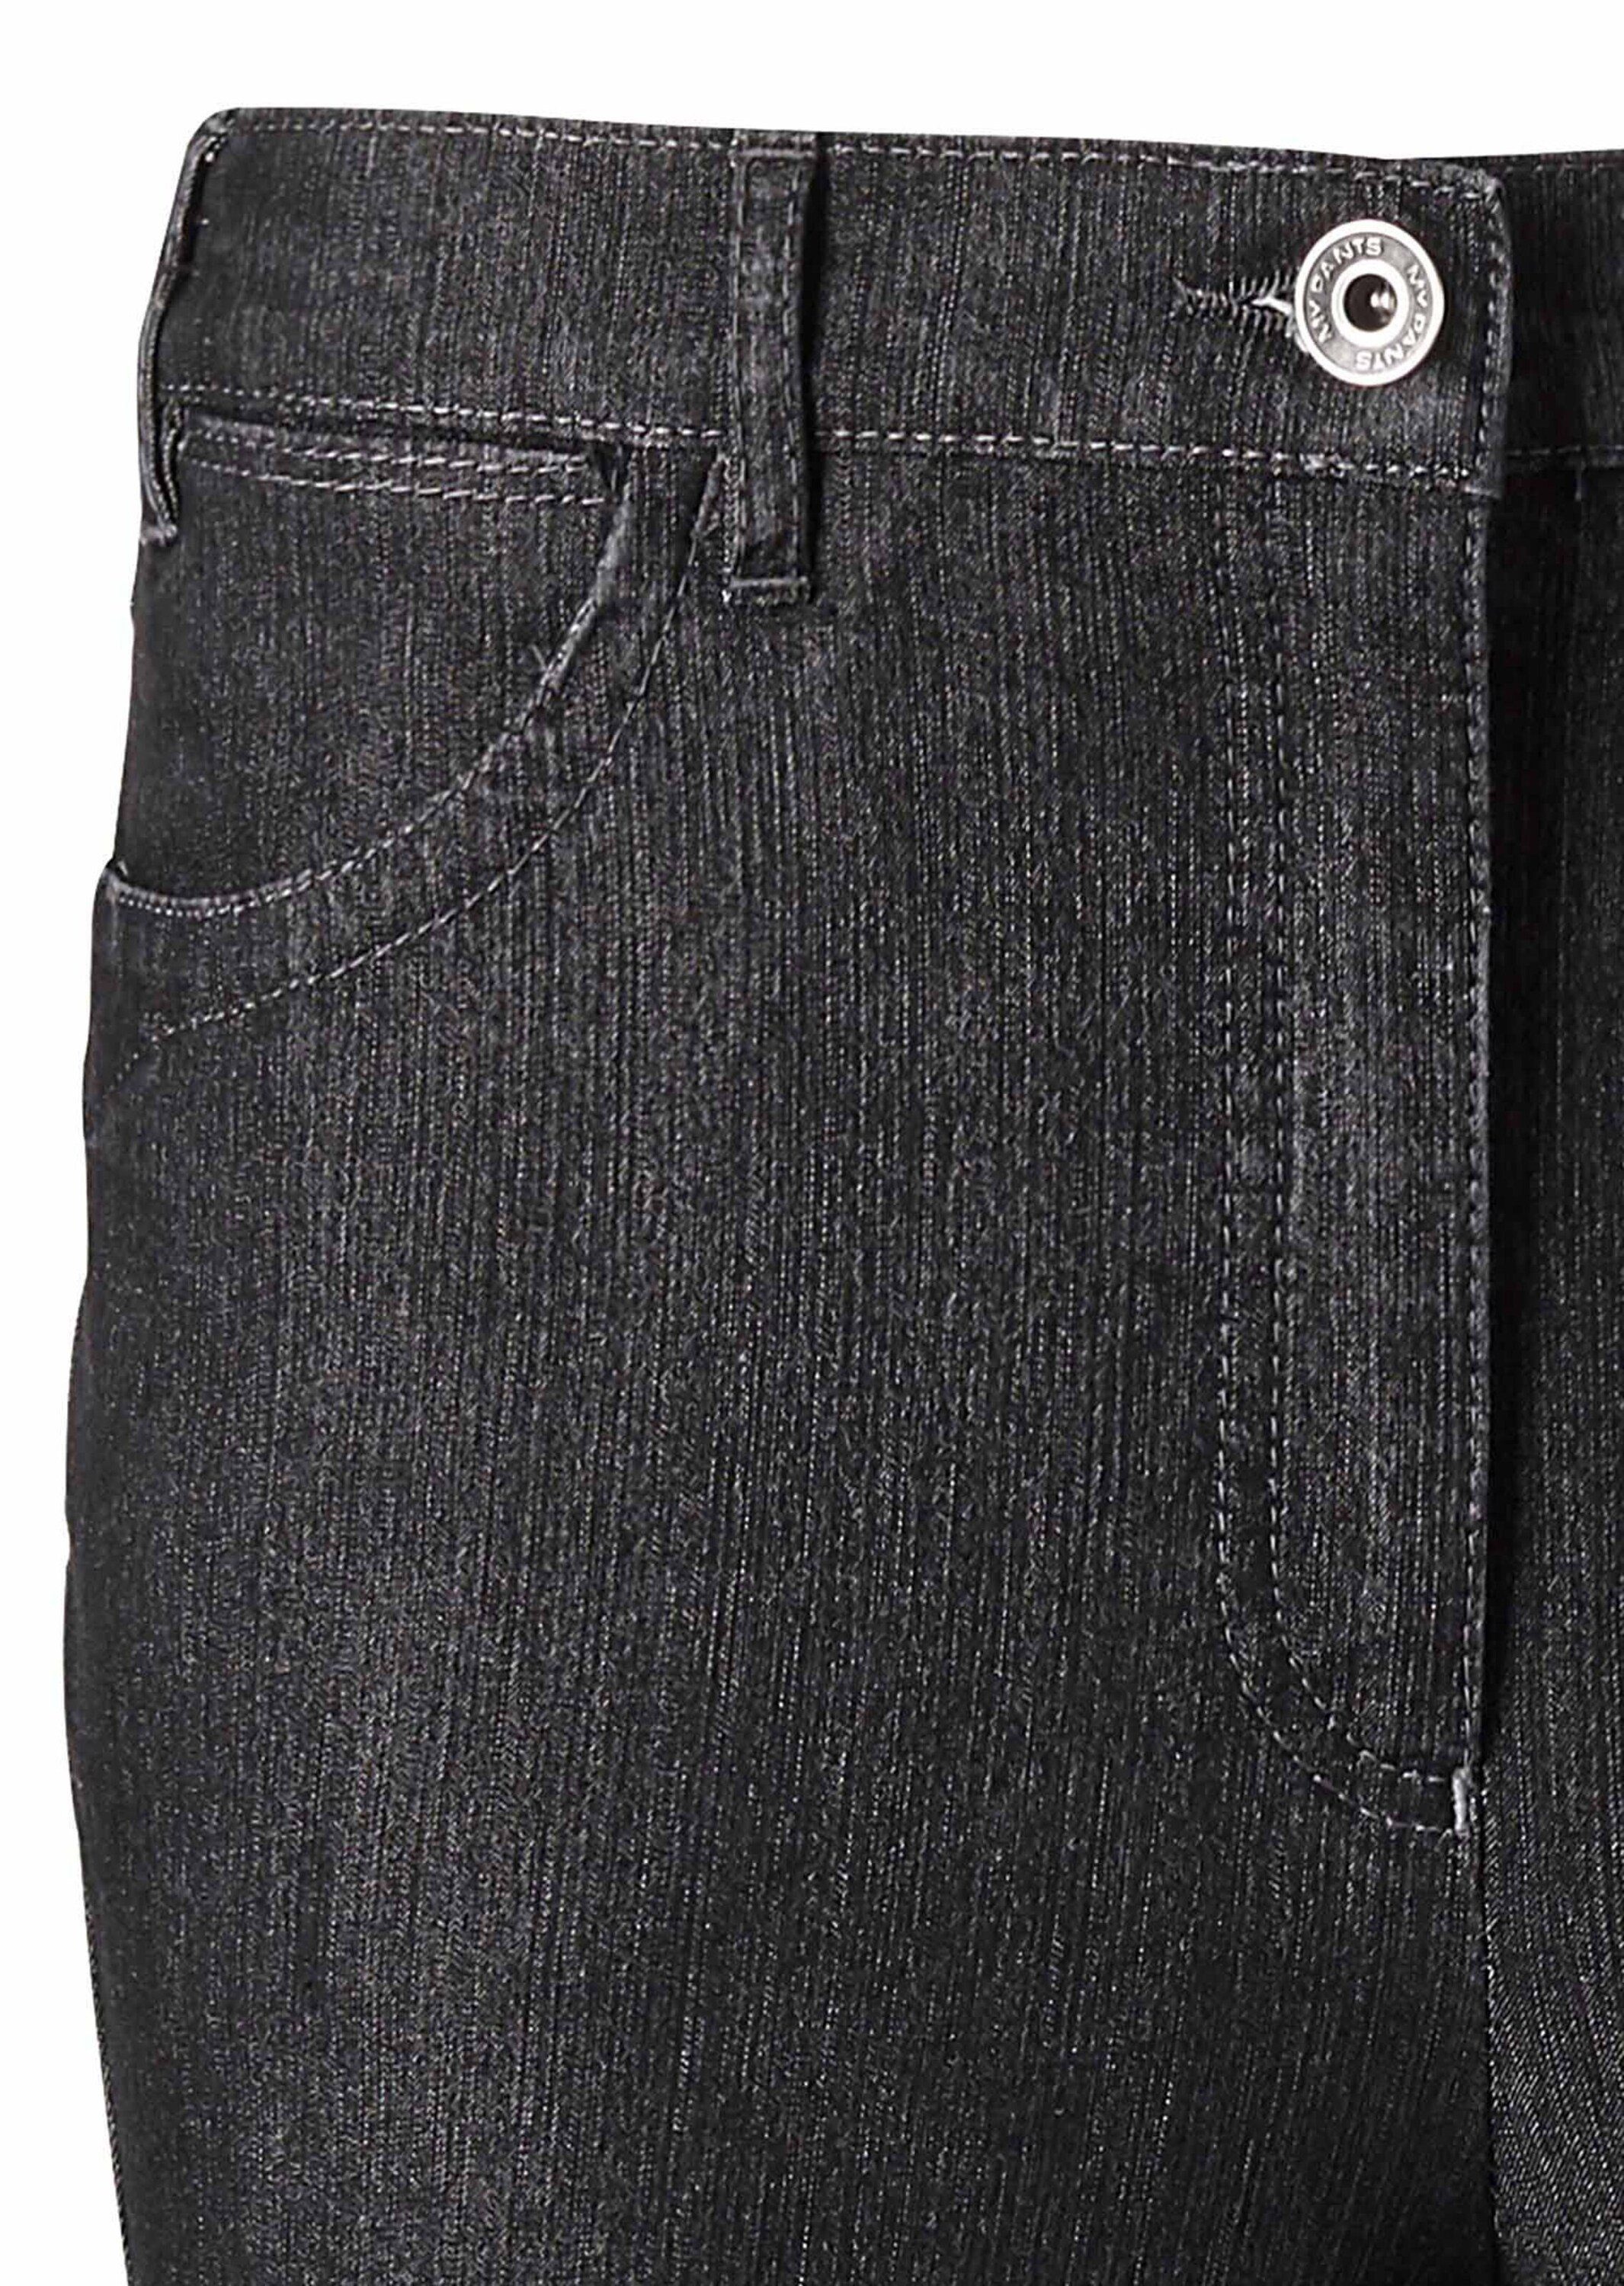 Jeans geschmückte schwarz Edel Jeanshose Bequeme GOLDNER ANNA